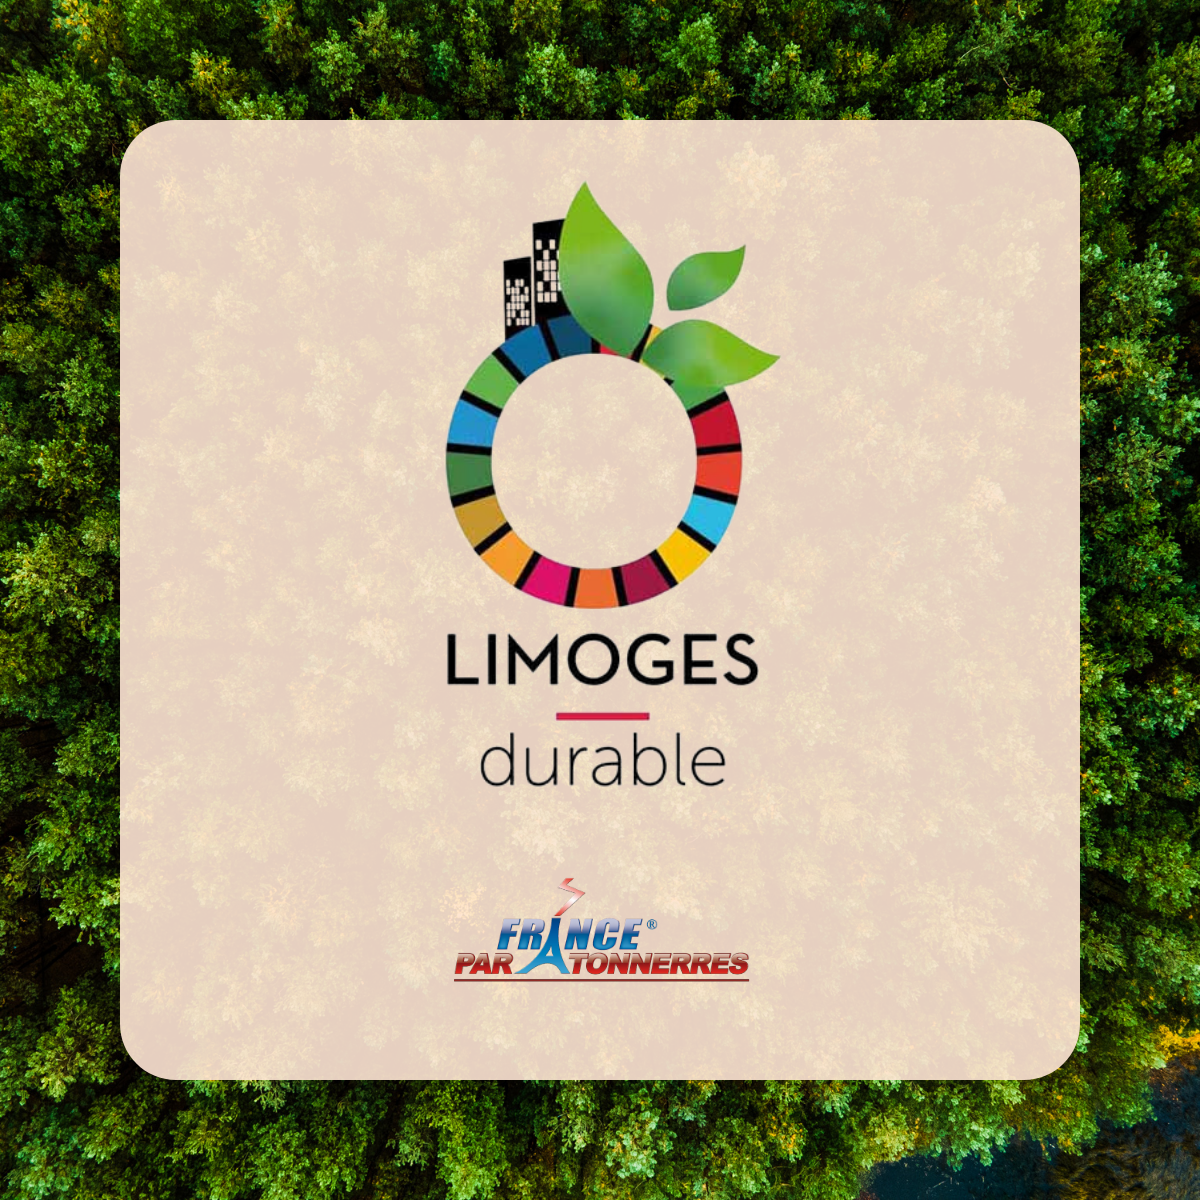 France Paratonnerres earns LIMOGES DURABLE label!